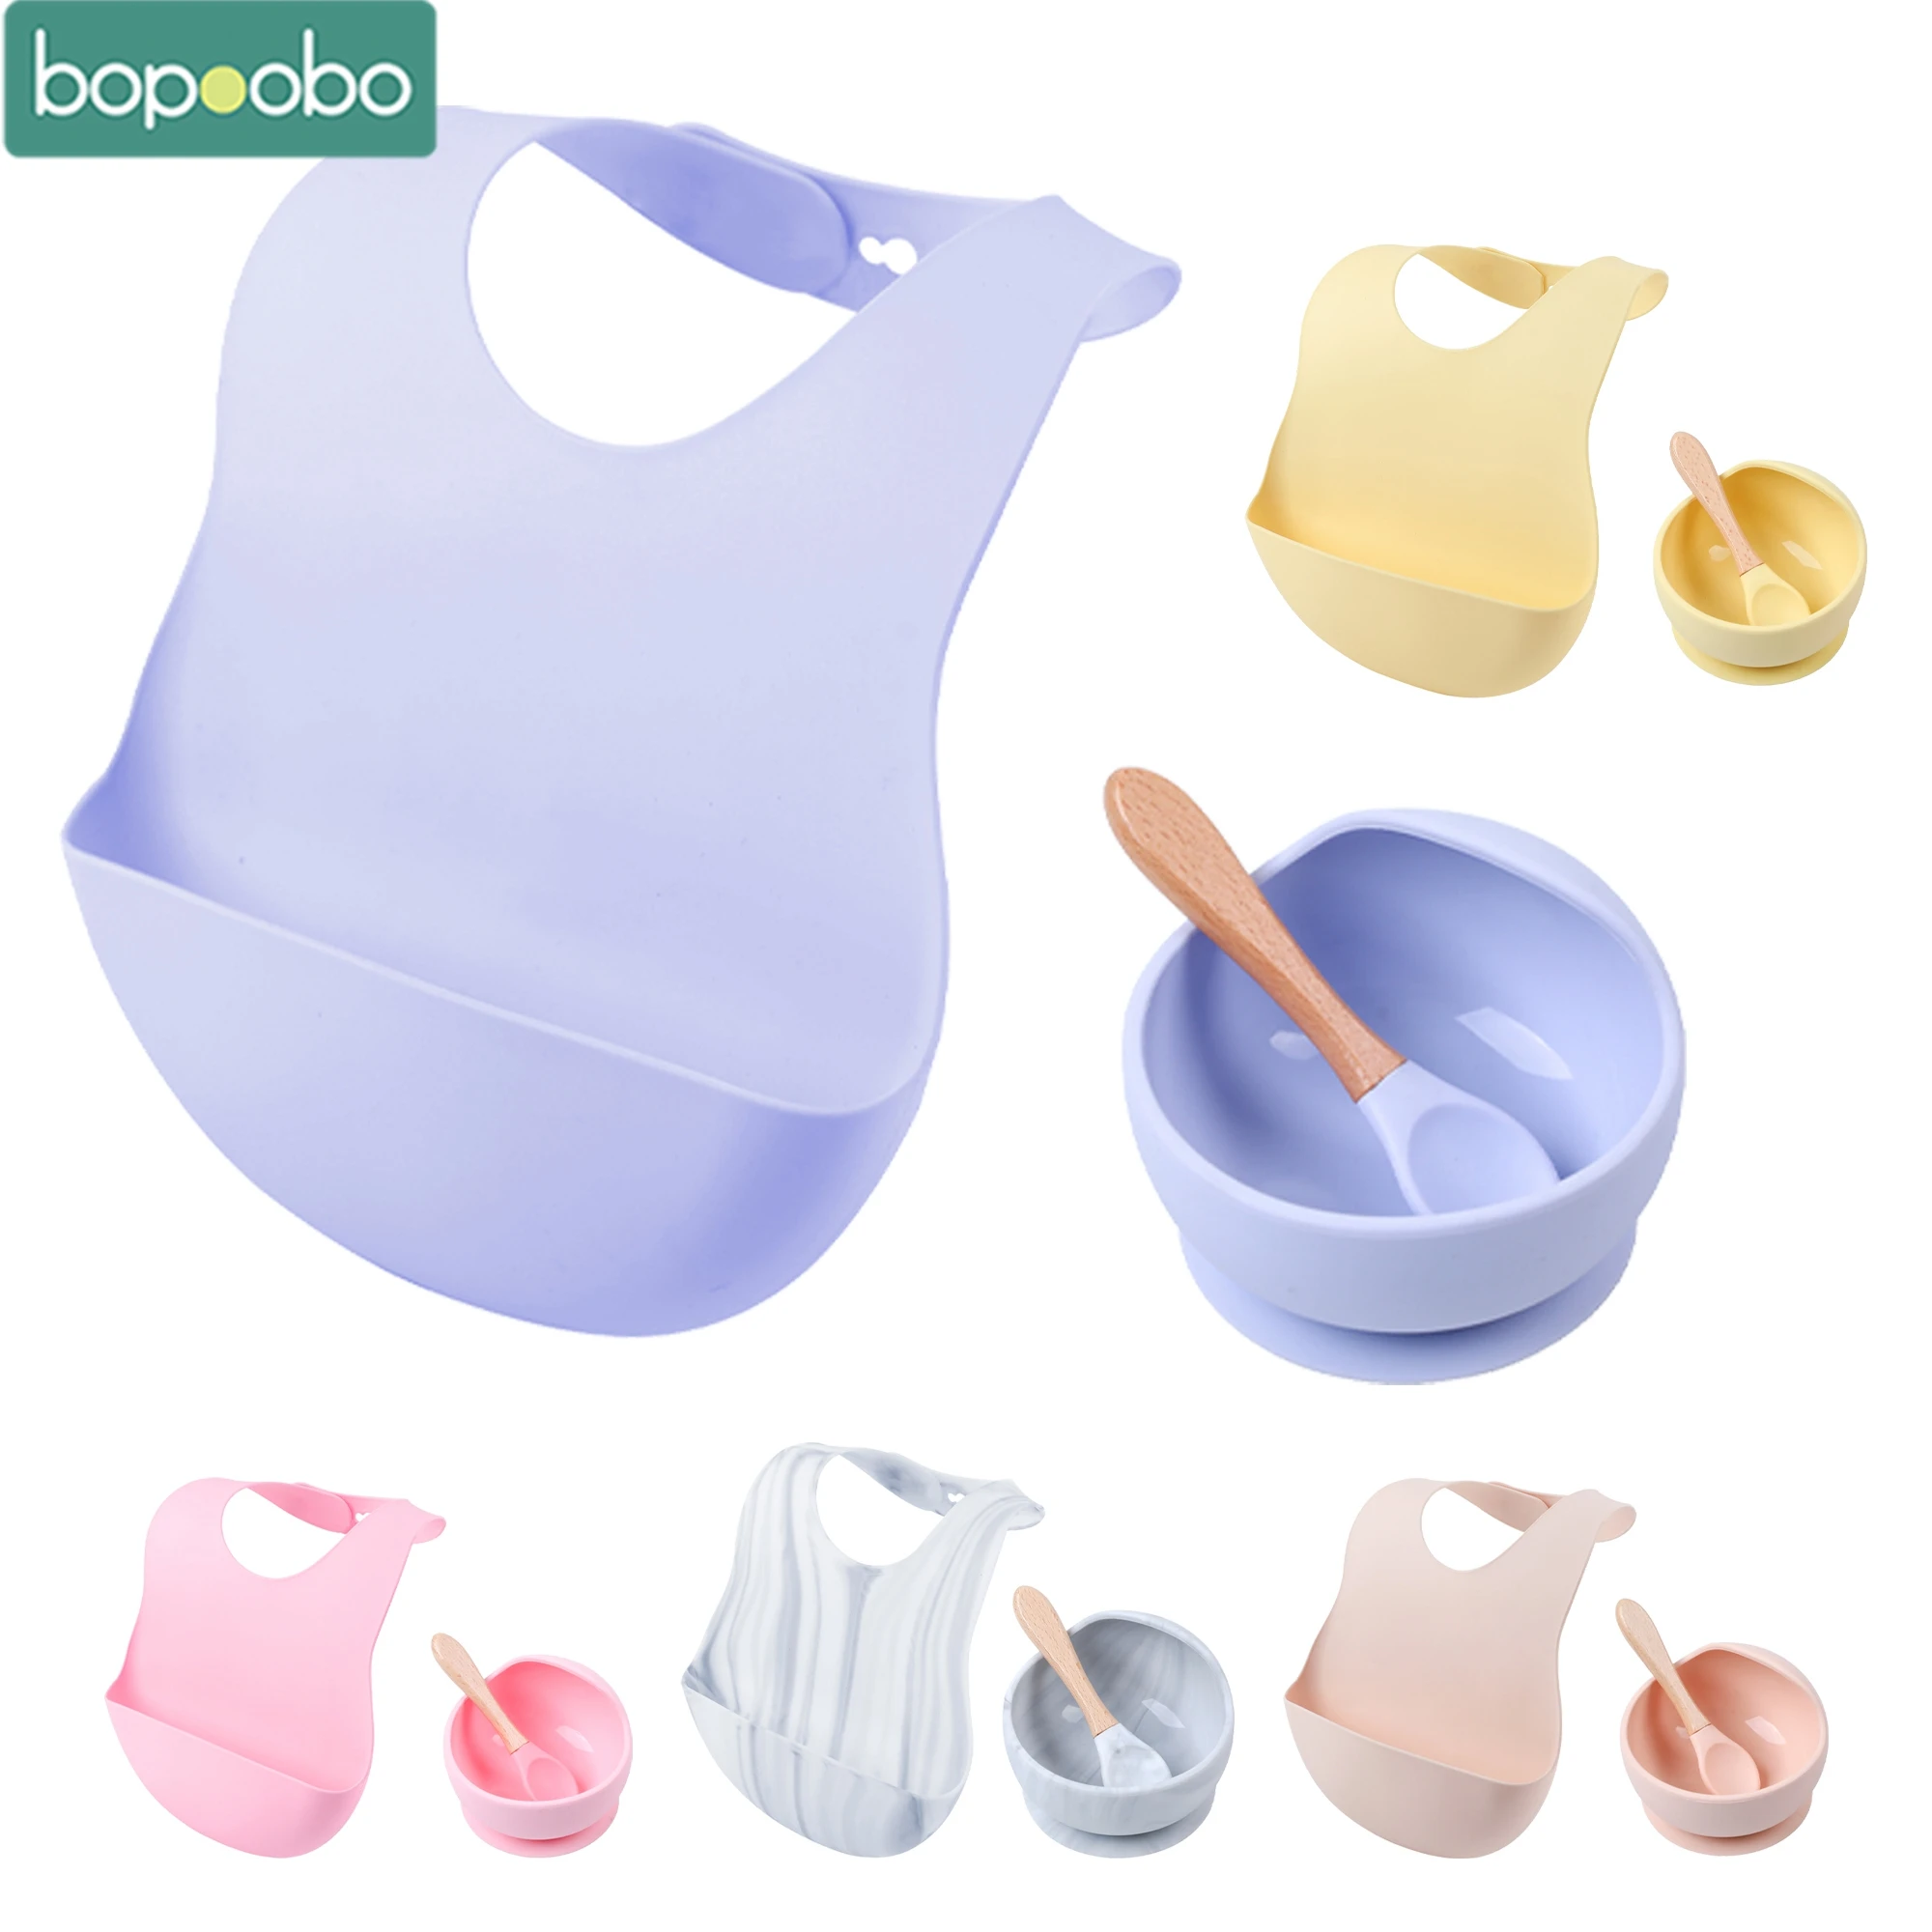 Bopoobo BPA Free Silicone Bibs Bowl Sets Baby Feeding Supplies 1PC Baby Silicone Chewing Food Grade Newborn Accessories Teeth